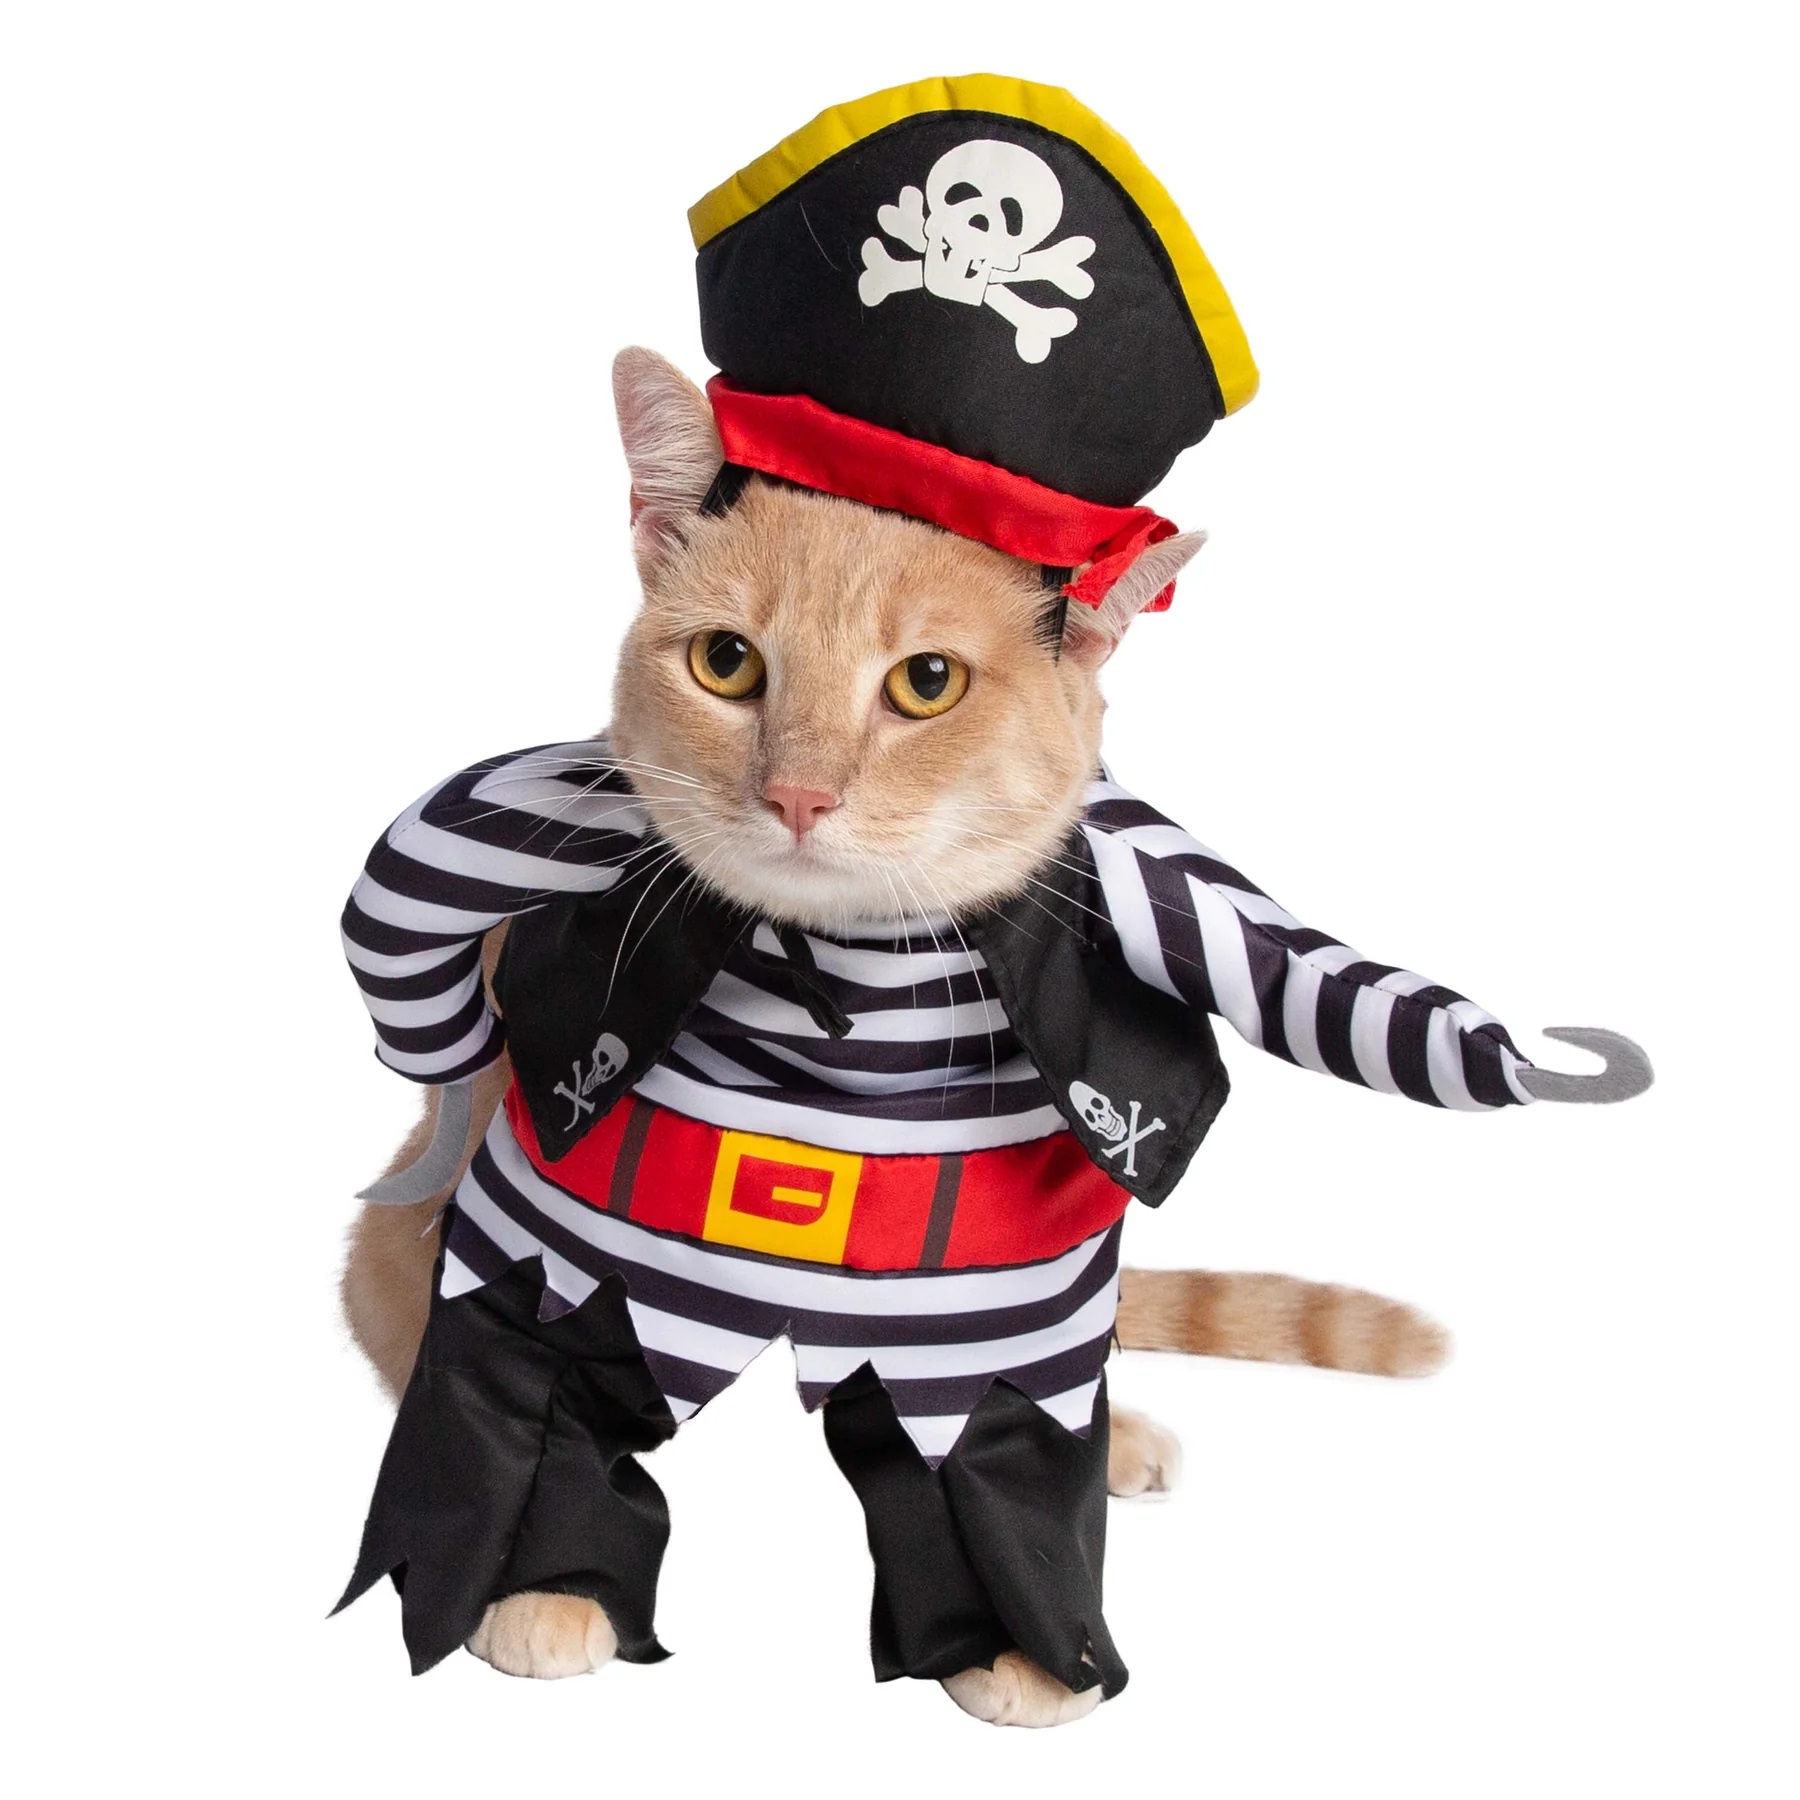 Pirate Cat Costume Black-Owned